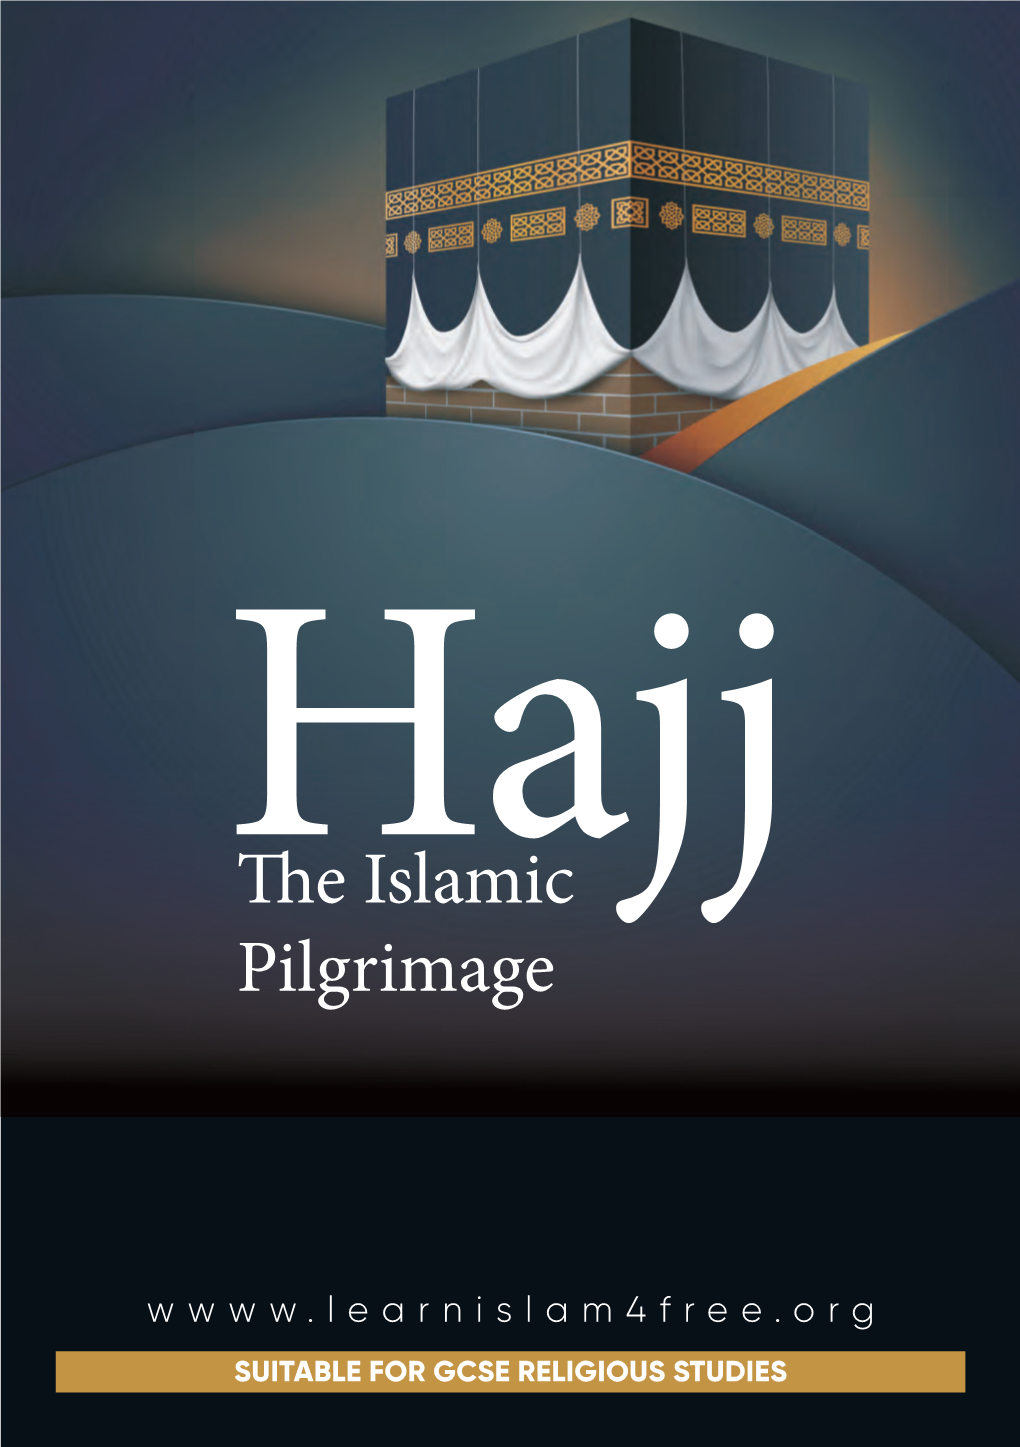 The Islamic Pilgrimage